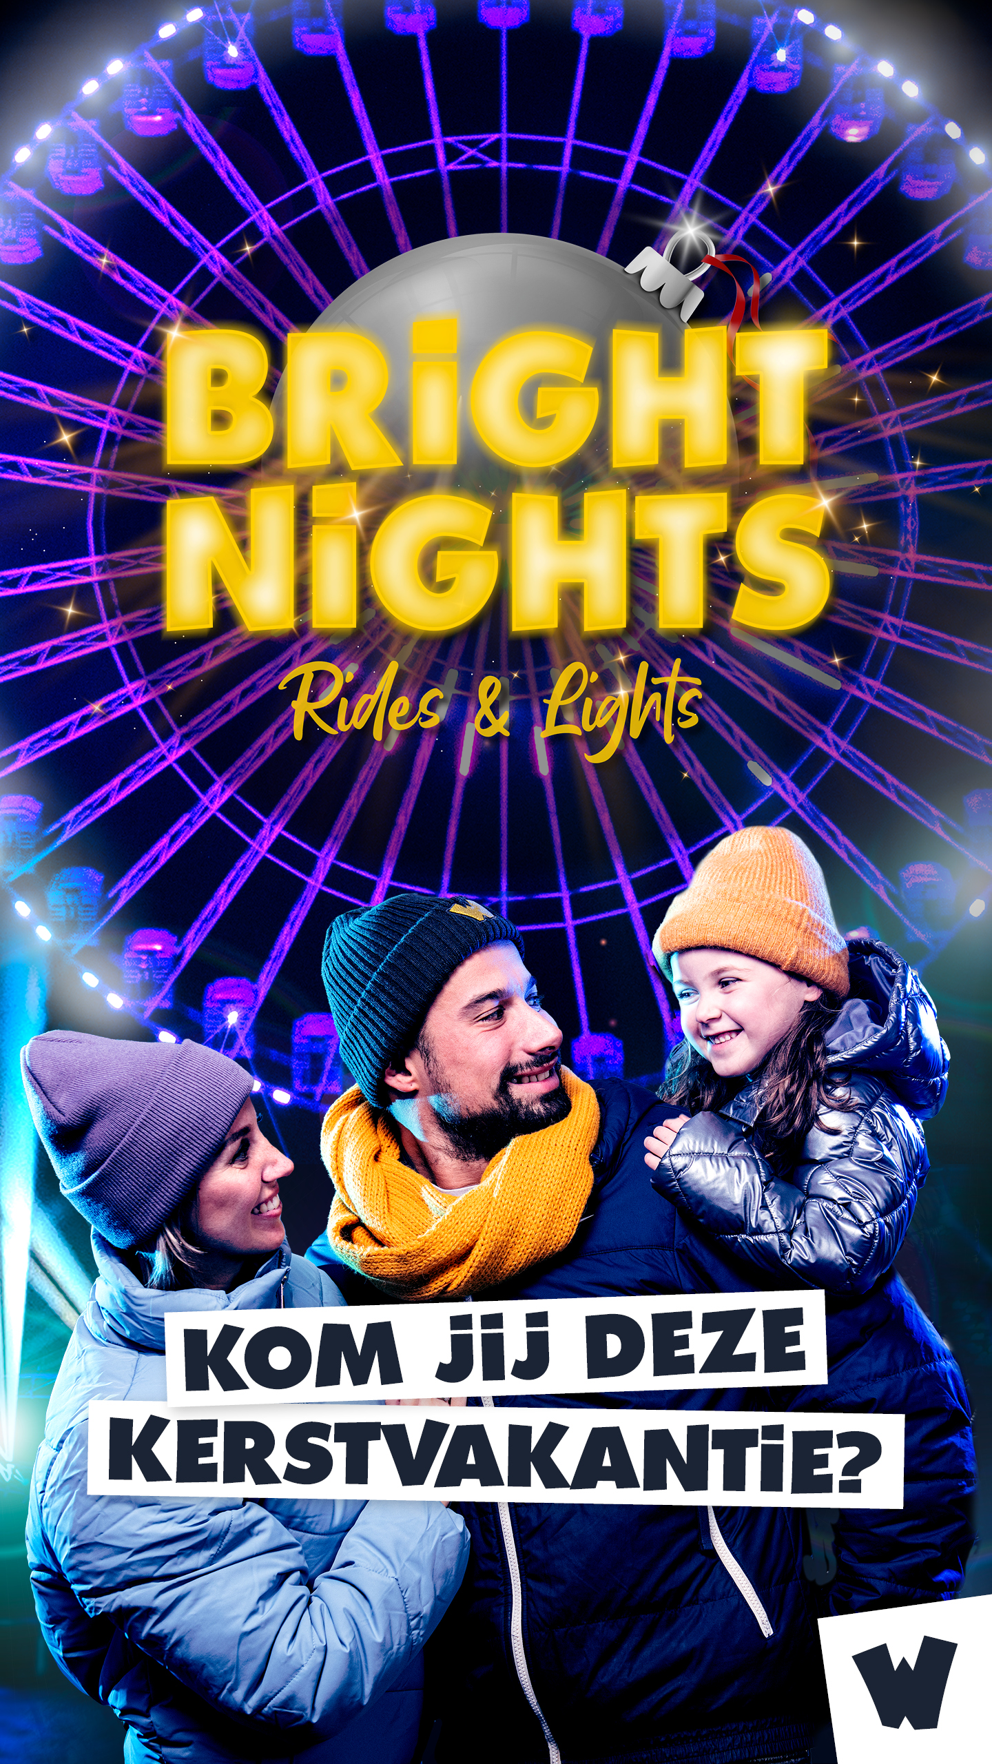 Bright Nights Walibi Holland kerstvakantie.jpg